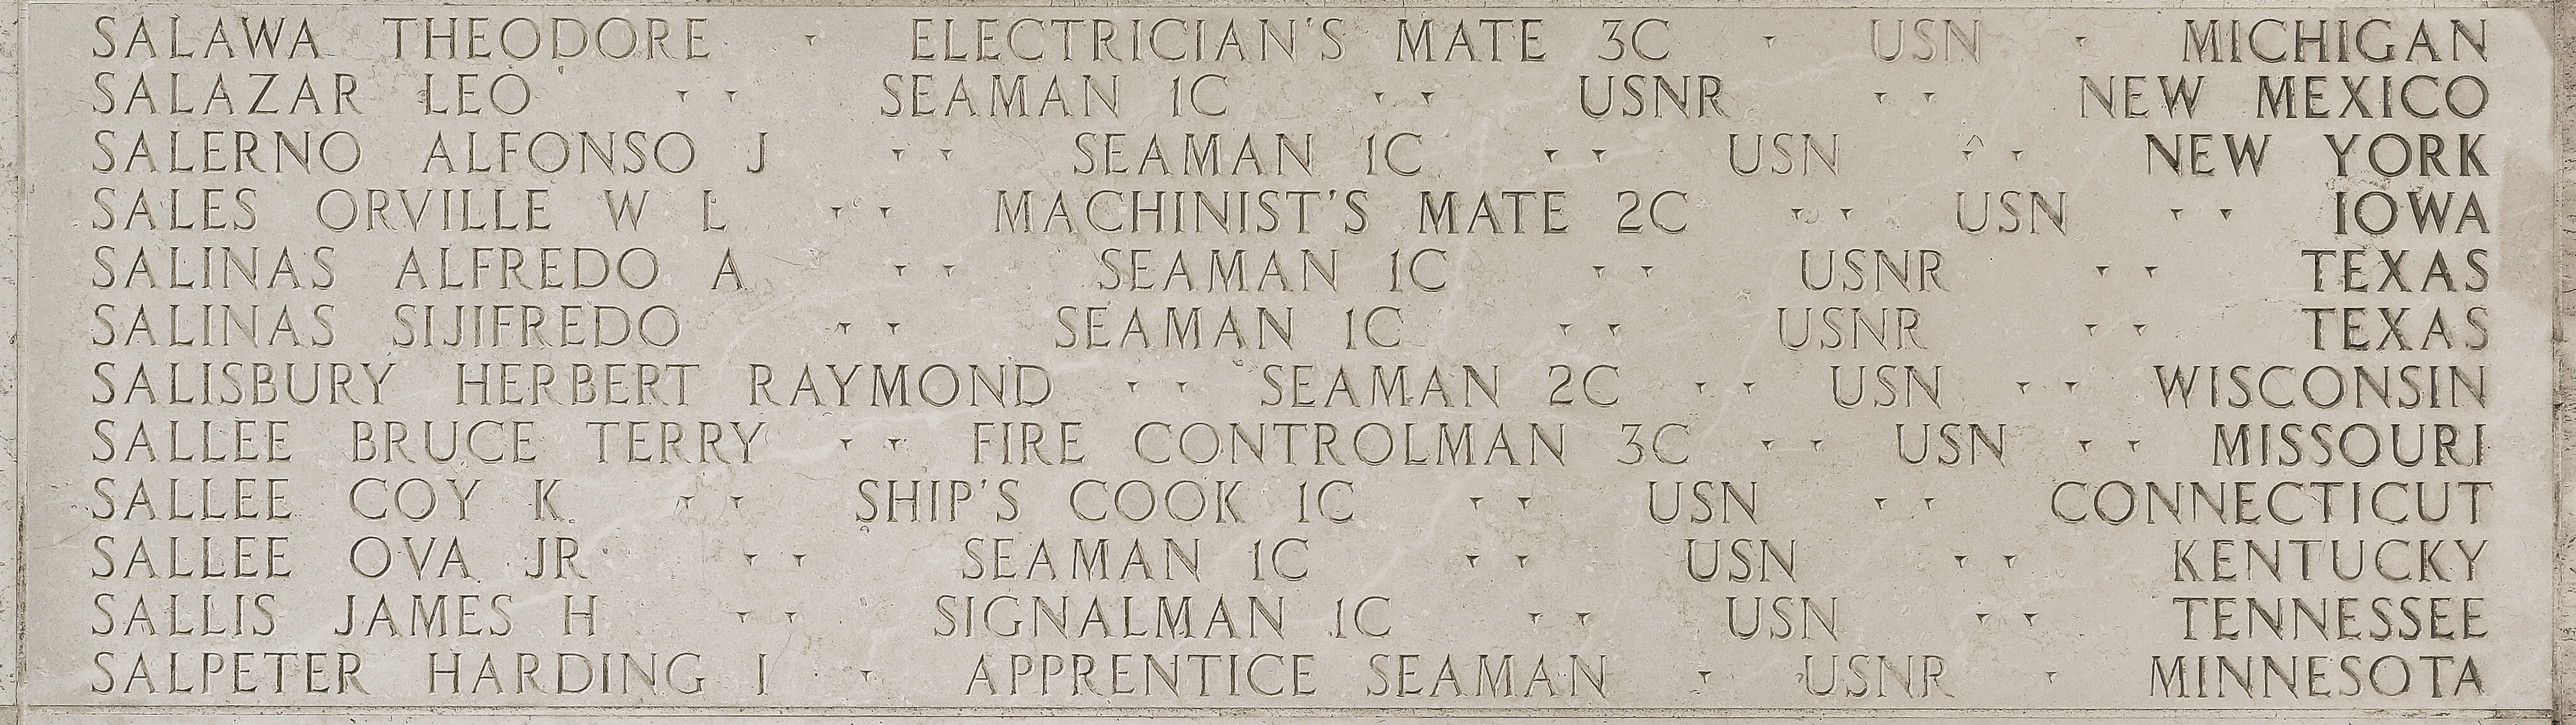 Harding I. Salpeter, Apprentice Seaman